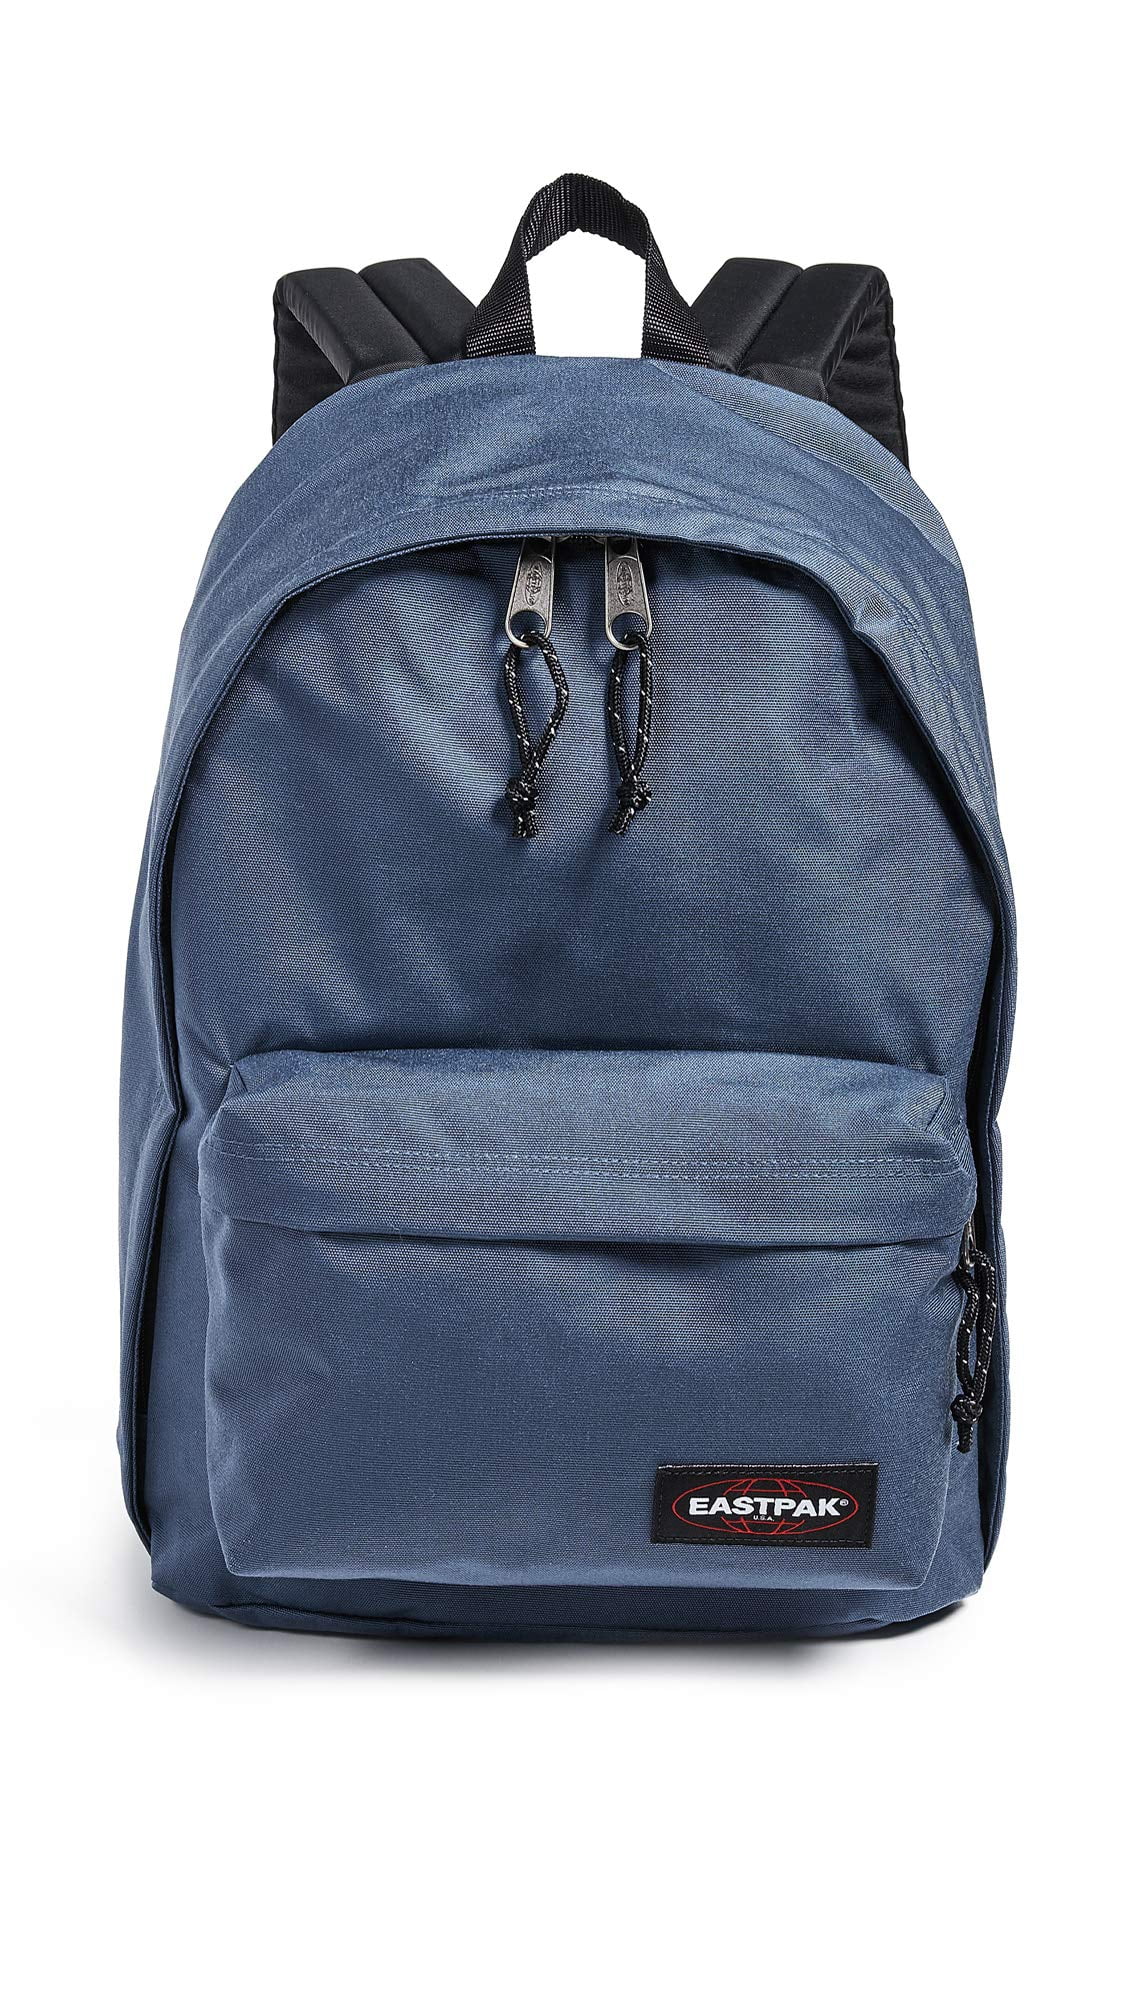 Promo: -18%] Eastpak Backpack PADDED PAK'R - best prices